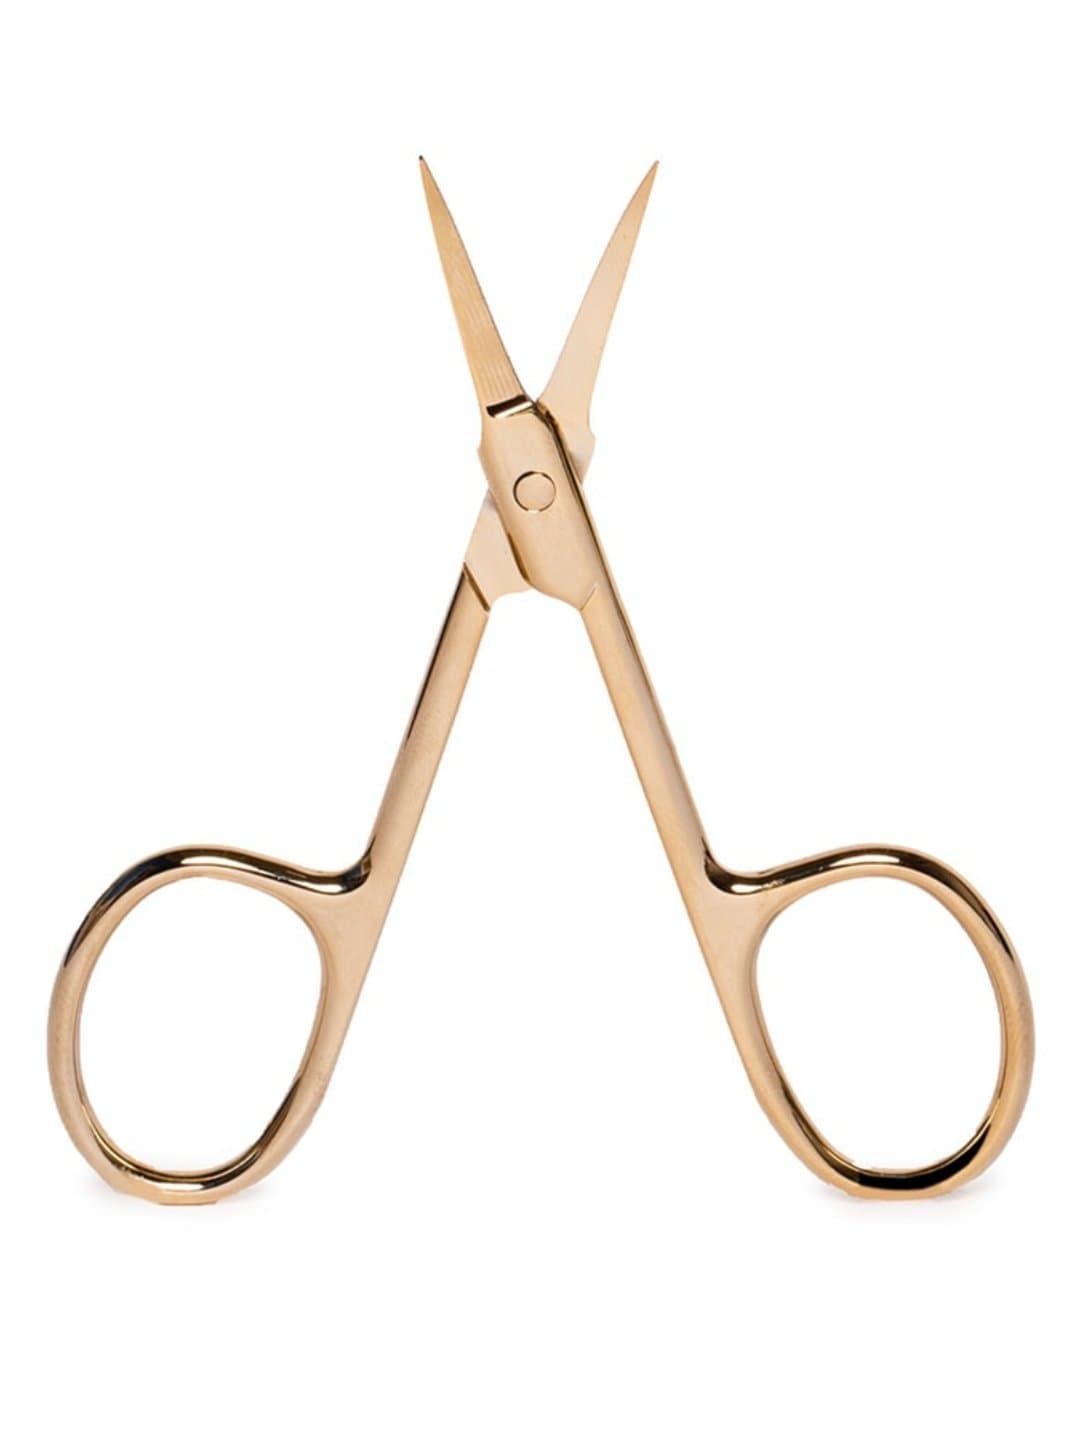 Lash & Brow Scissors Gold – Garcia Glam Beauty